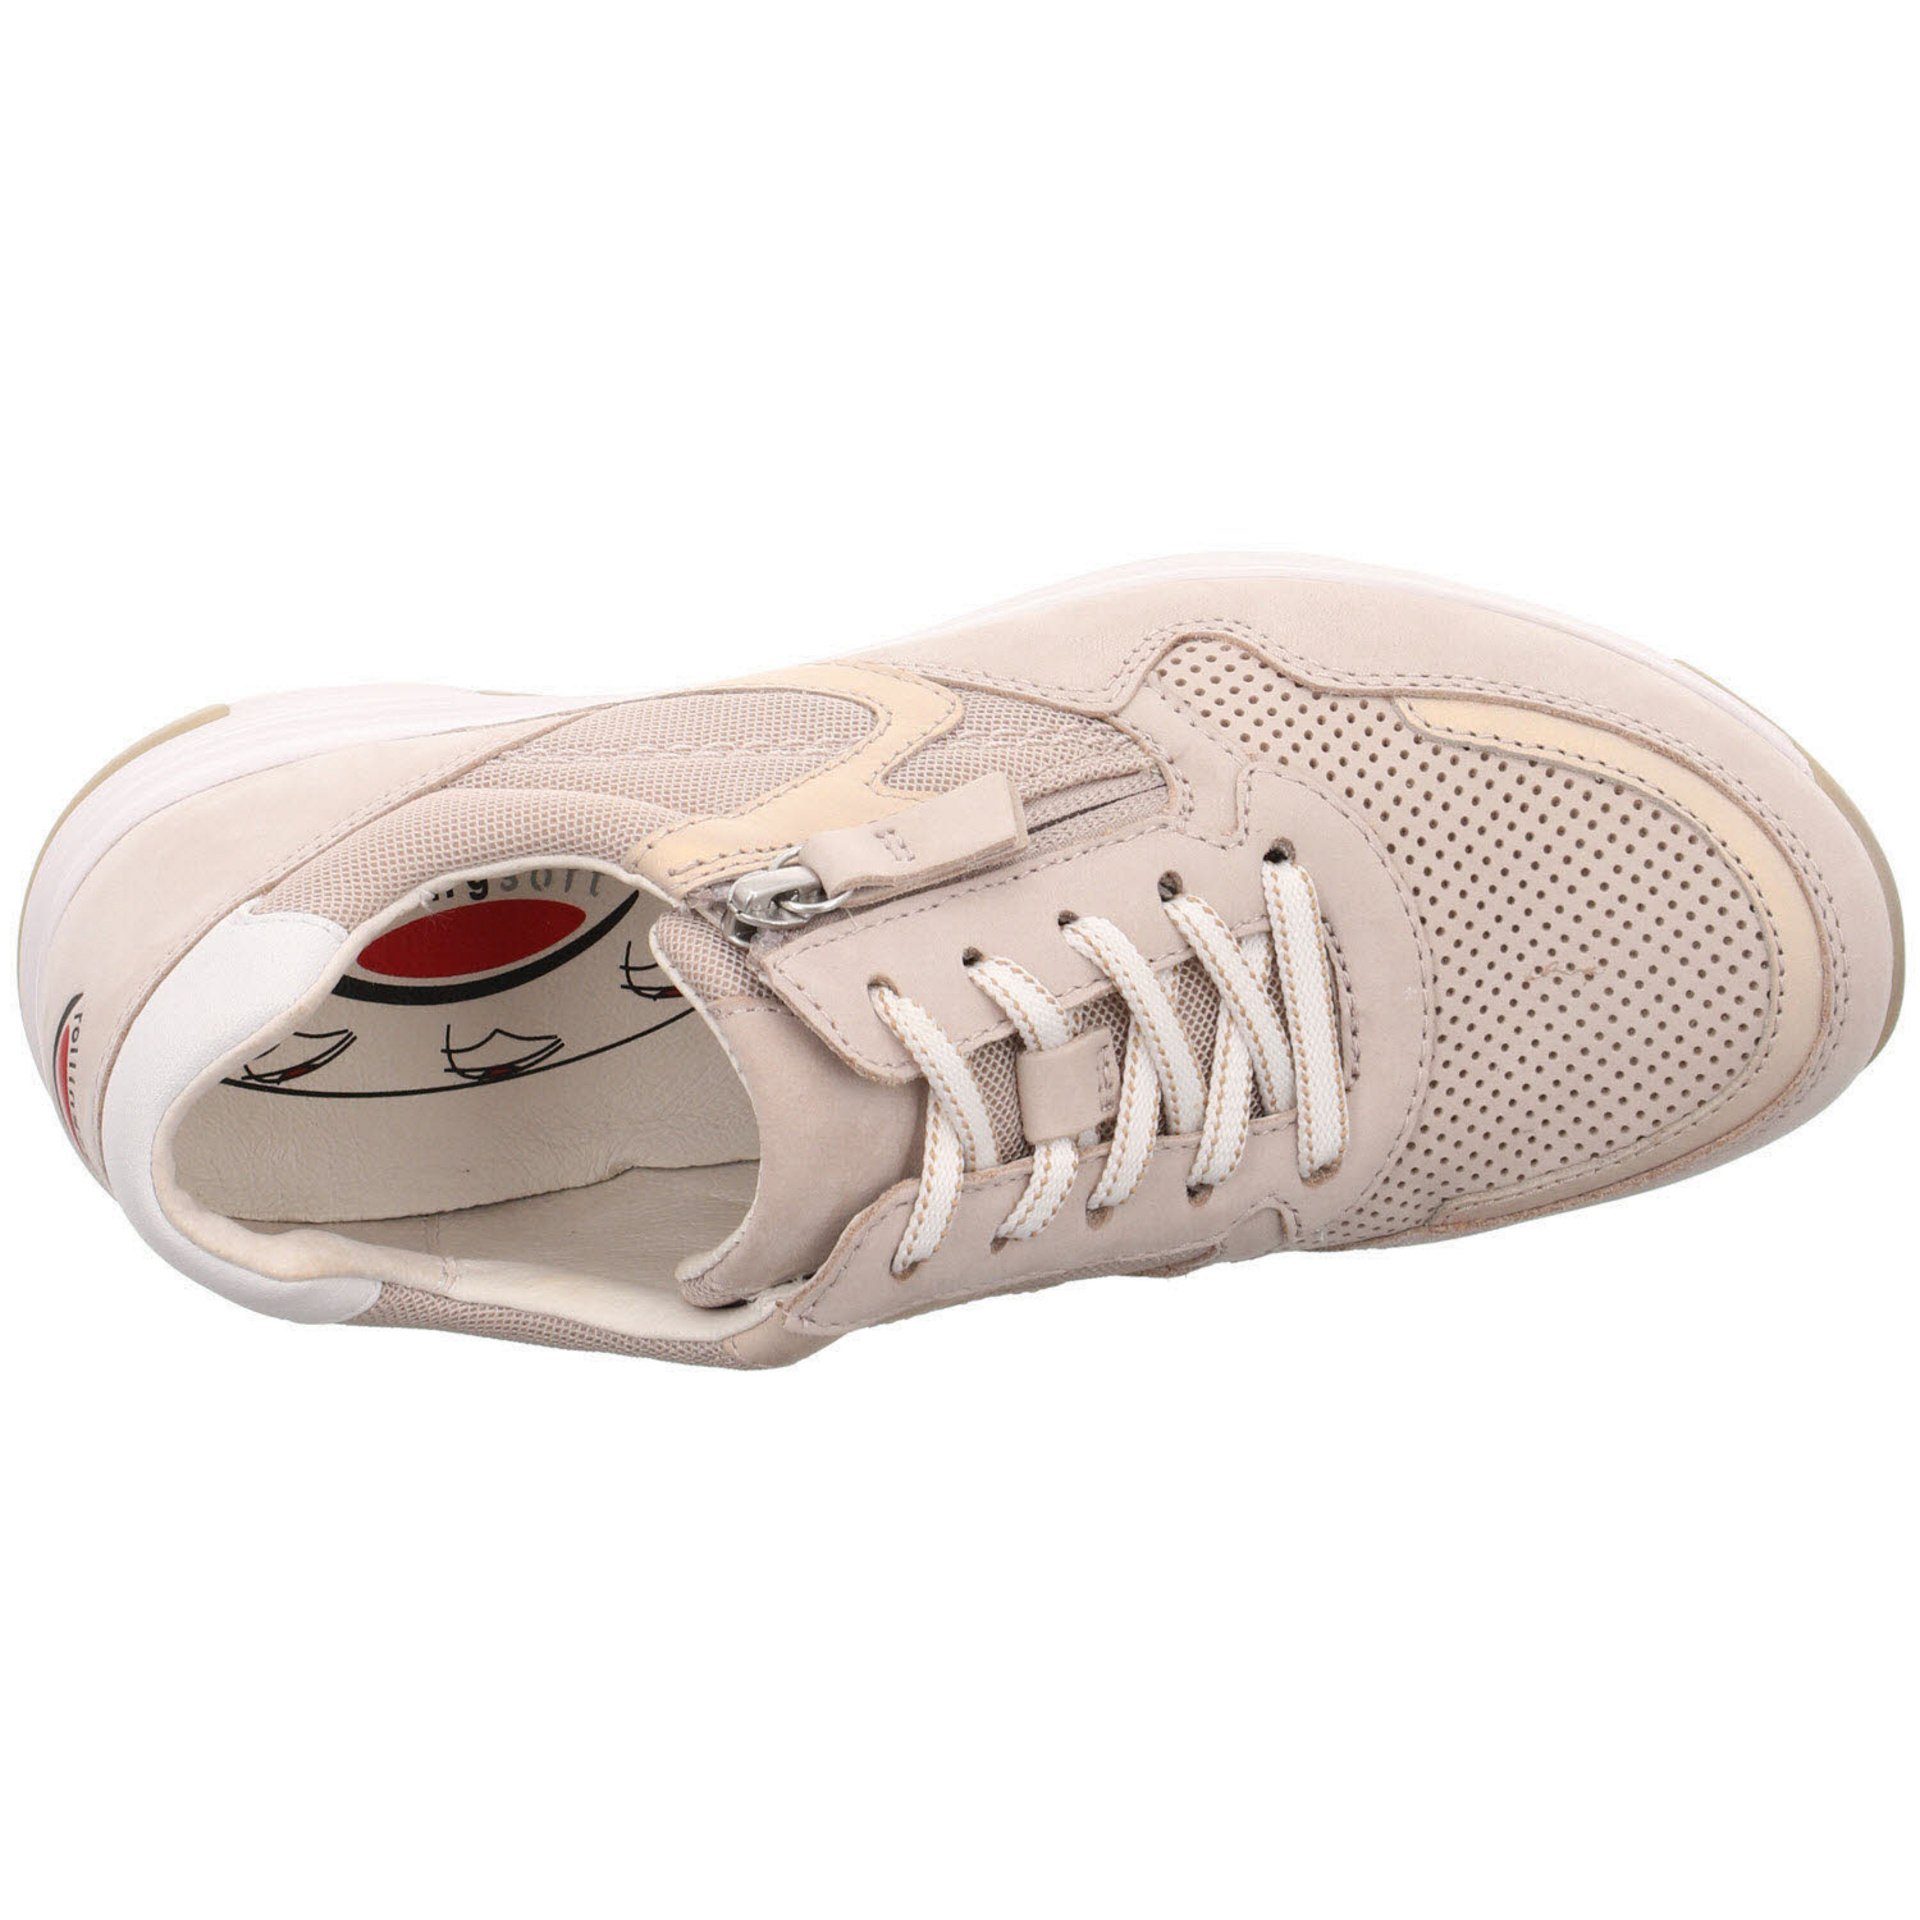 Rollingsoft Sneaker Sneaker 31) Gabor Schuhe / Beige Damen Leder-/Textilkombination Schnürschuh (puder/weiss